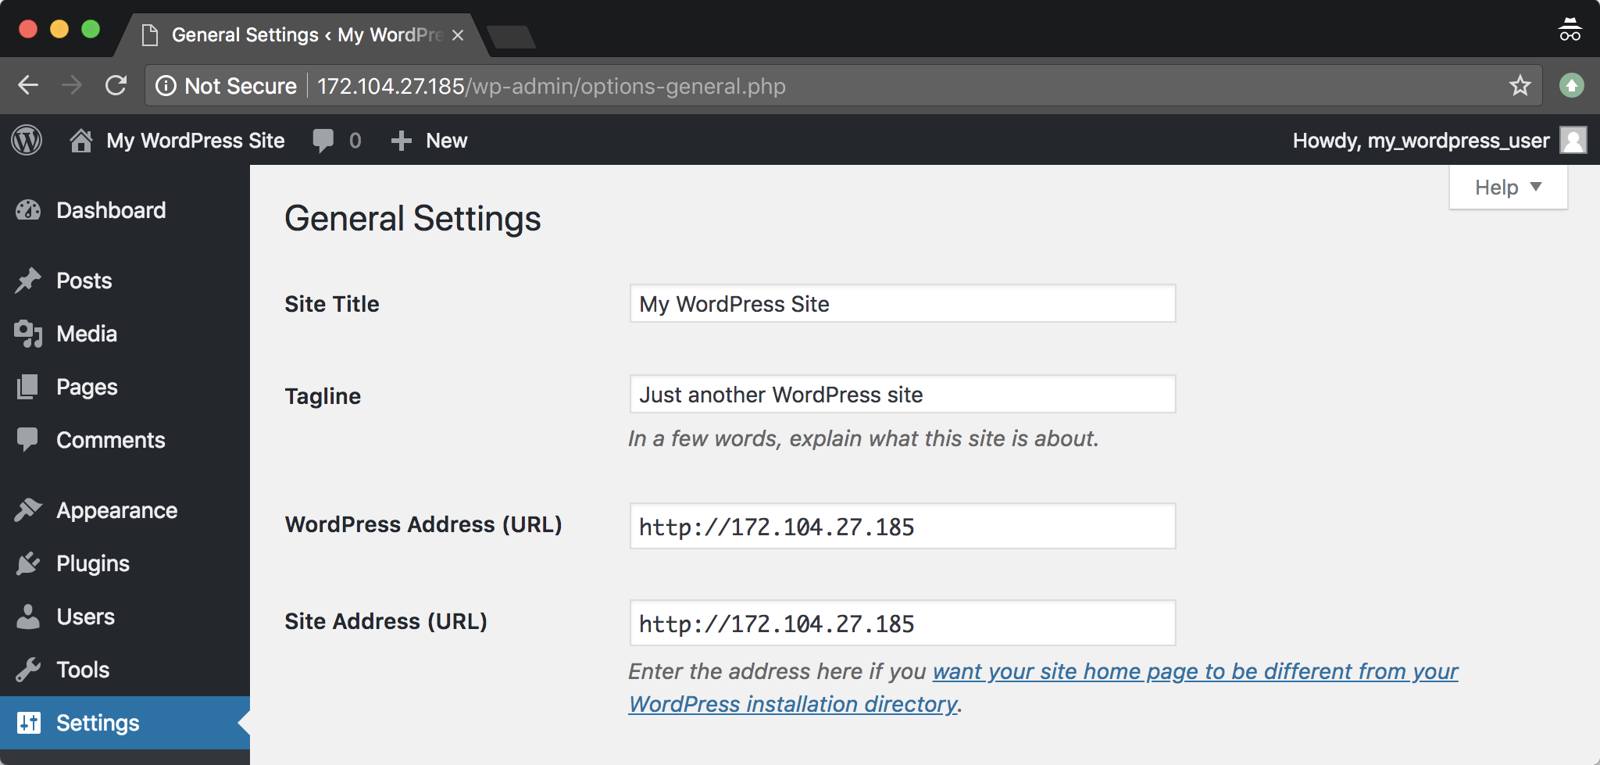 WordPress settings screen in the web browser